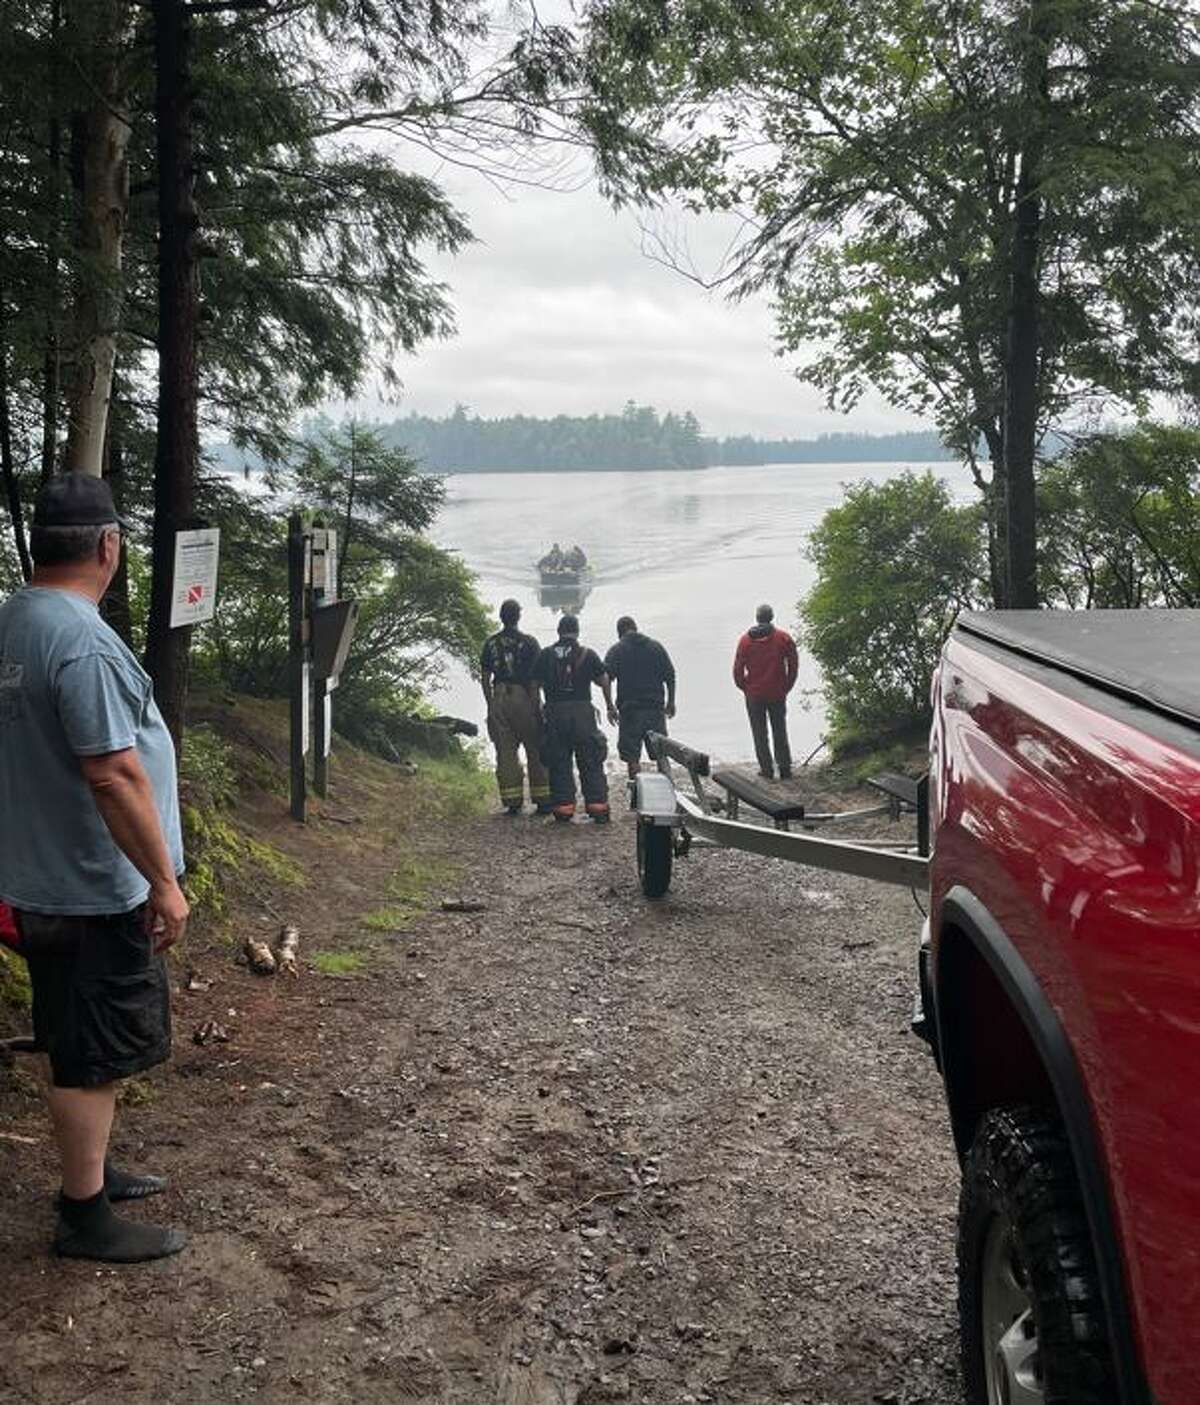 Campers struck by lightning on Adirondack island near Saranac Lake